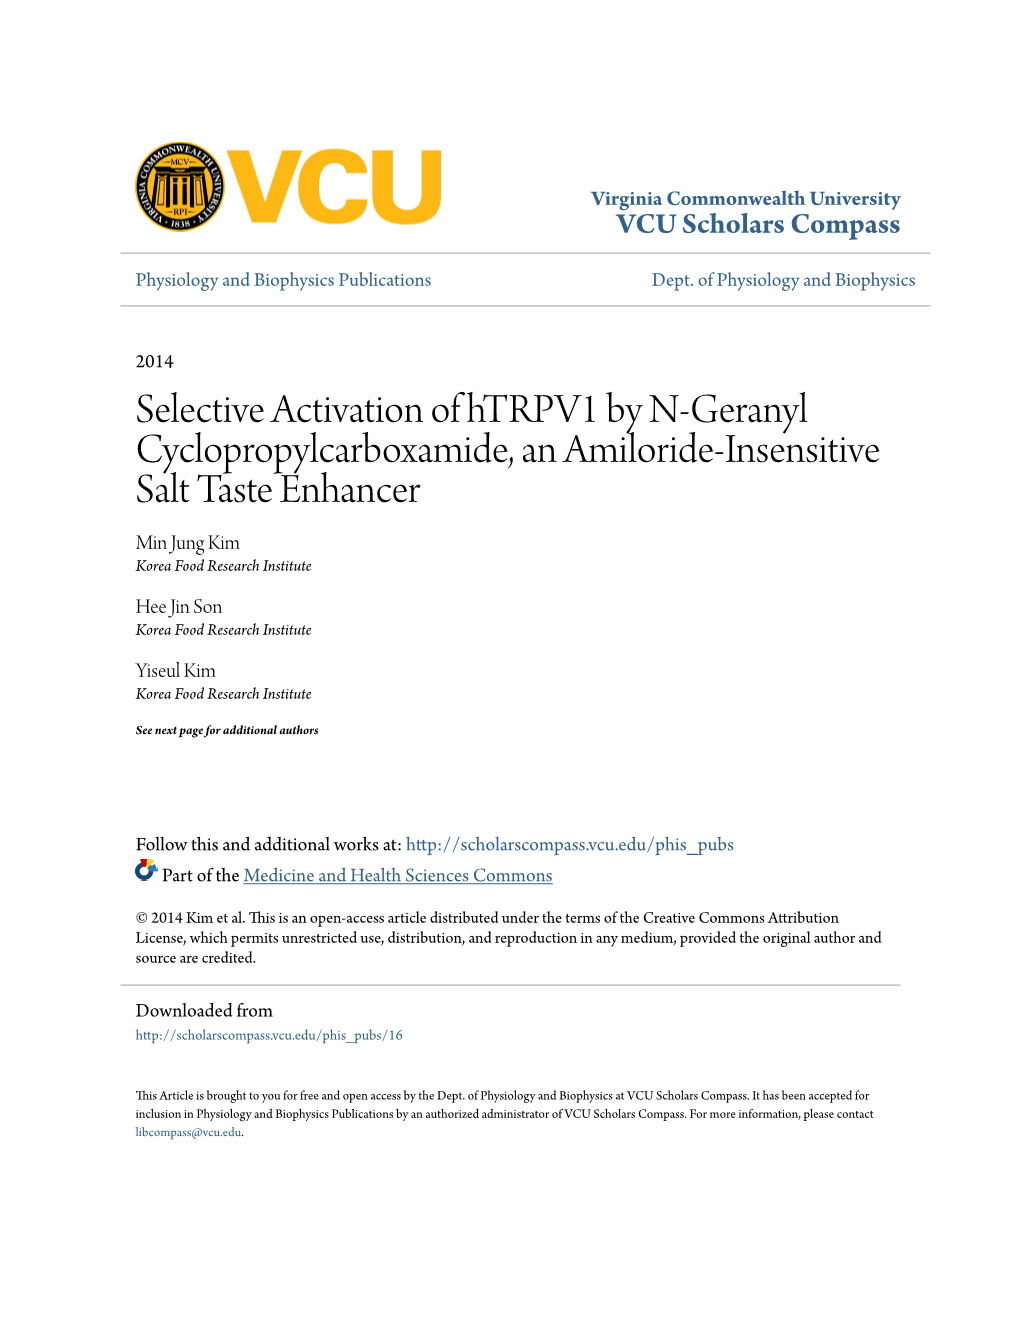 Selective Activation of Htrpv1 by N-Geranyl Cyclopropylcarboxamide, an Amiloride-Insensitive Salt Taste Enhancer Min Jung Kim Korea Food Research Institute